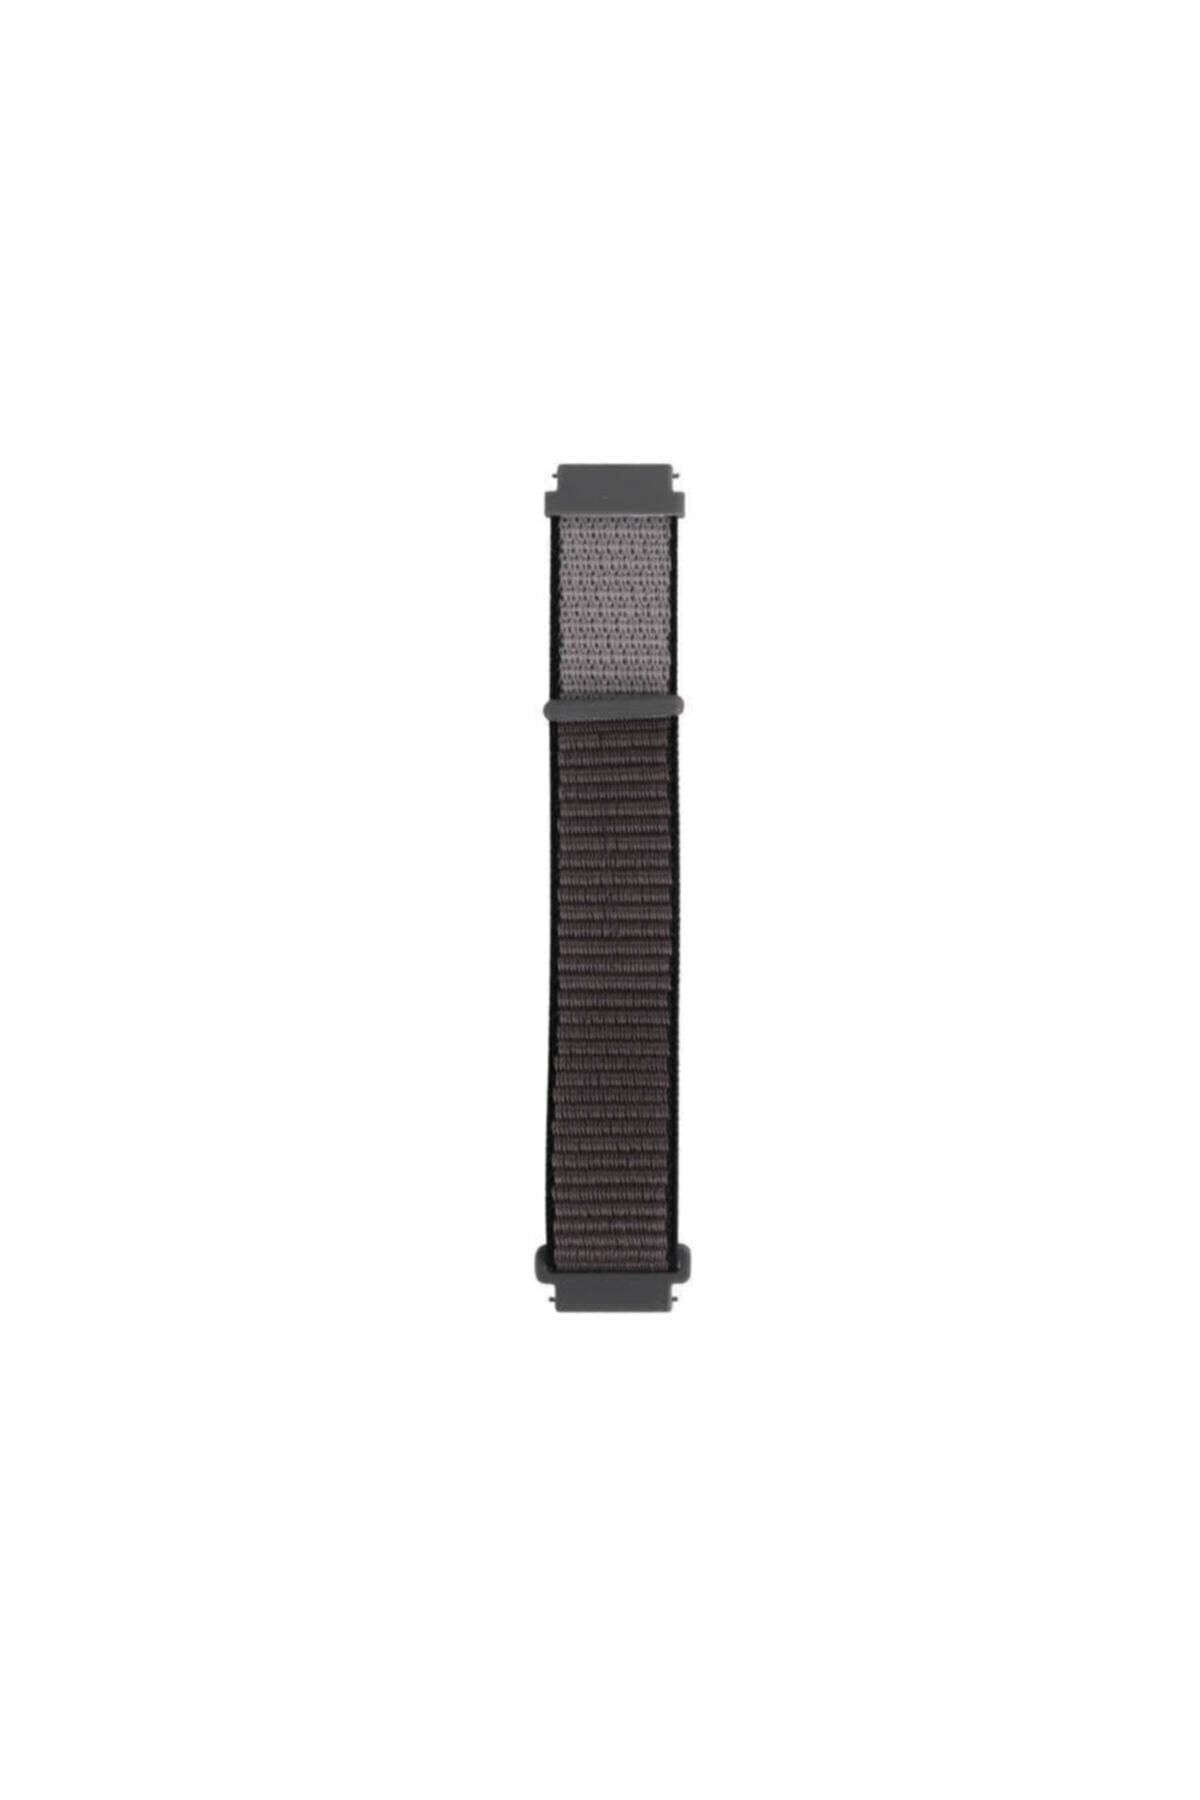 Fibaks Samsung Galaxy Watch 42mm (20MM) Akıllı Saat Kordonu Hasır Dokuma Kordon Kayış Bileklik